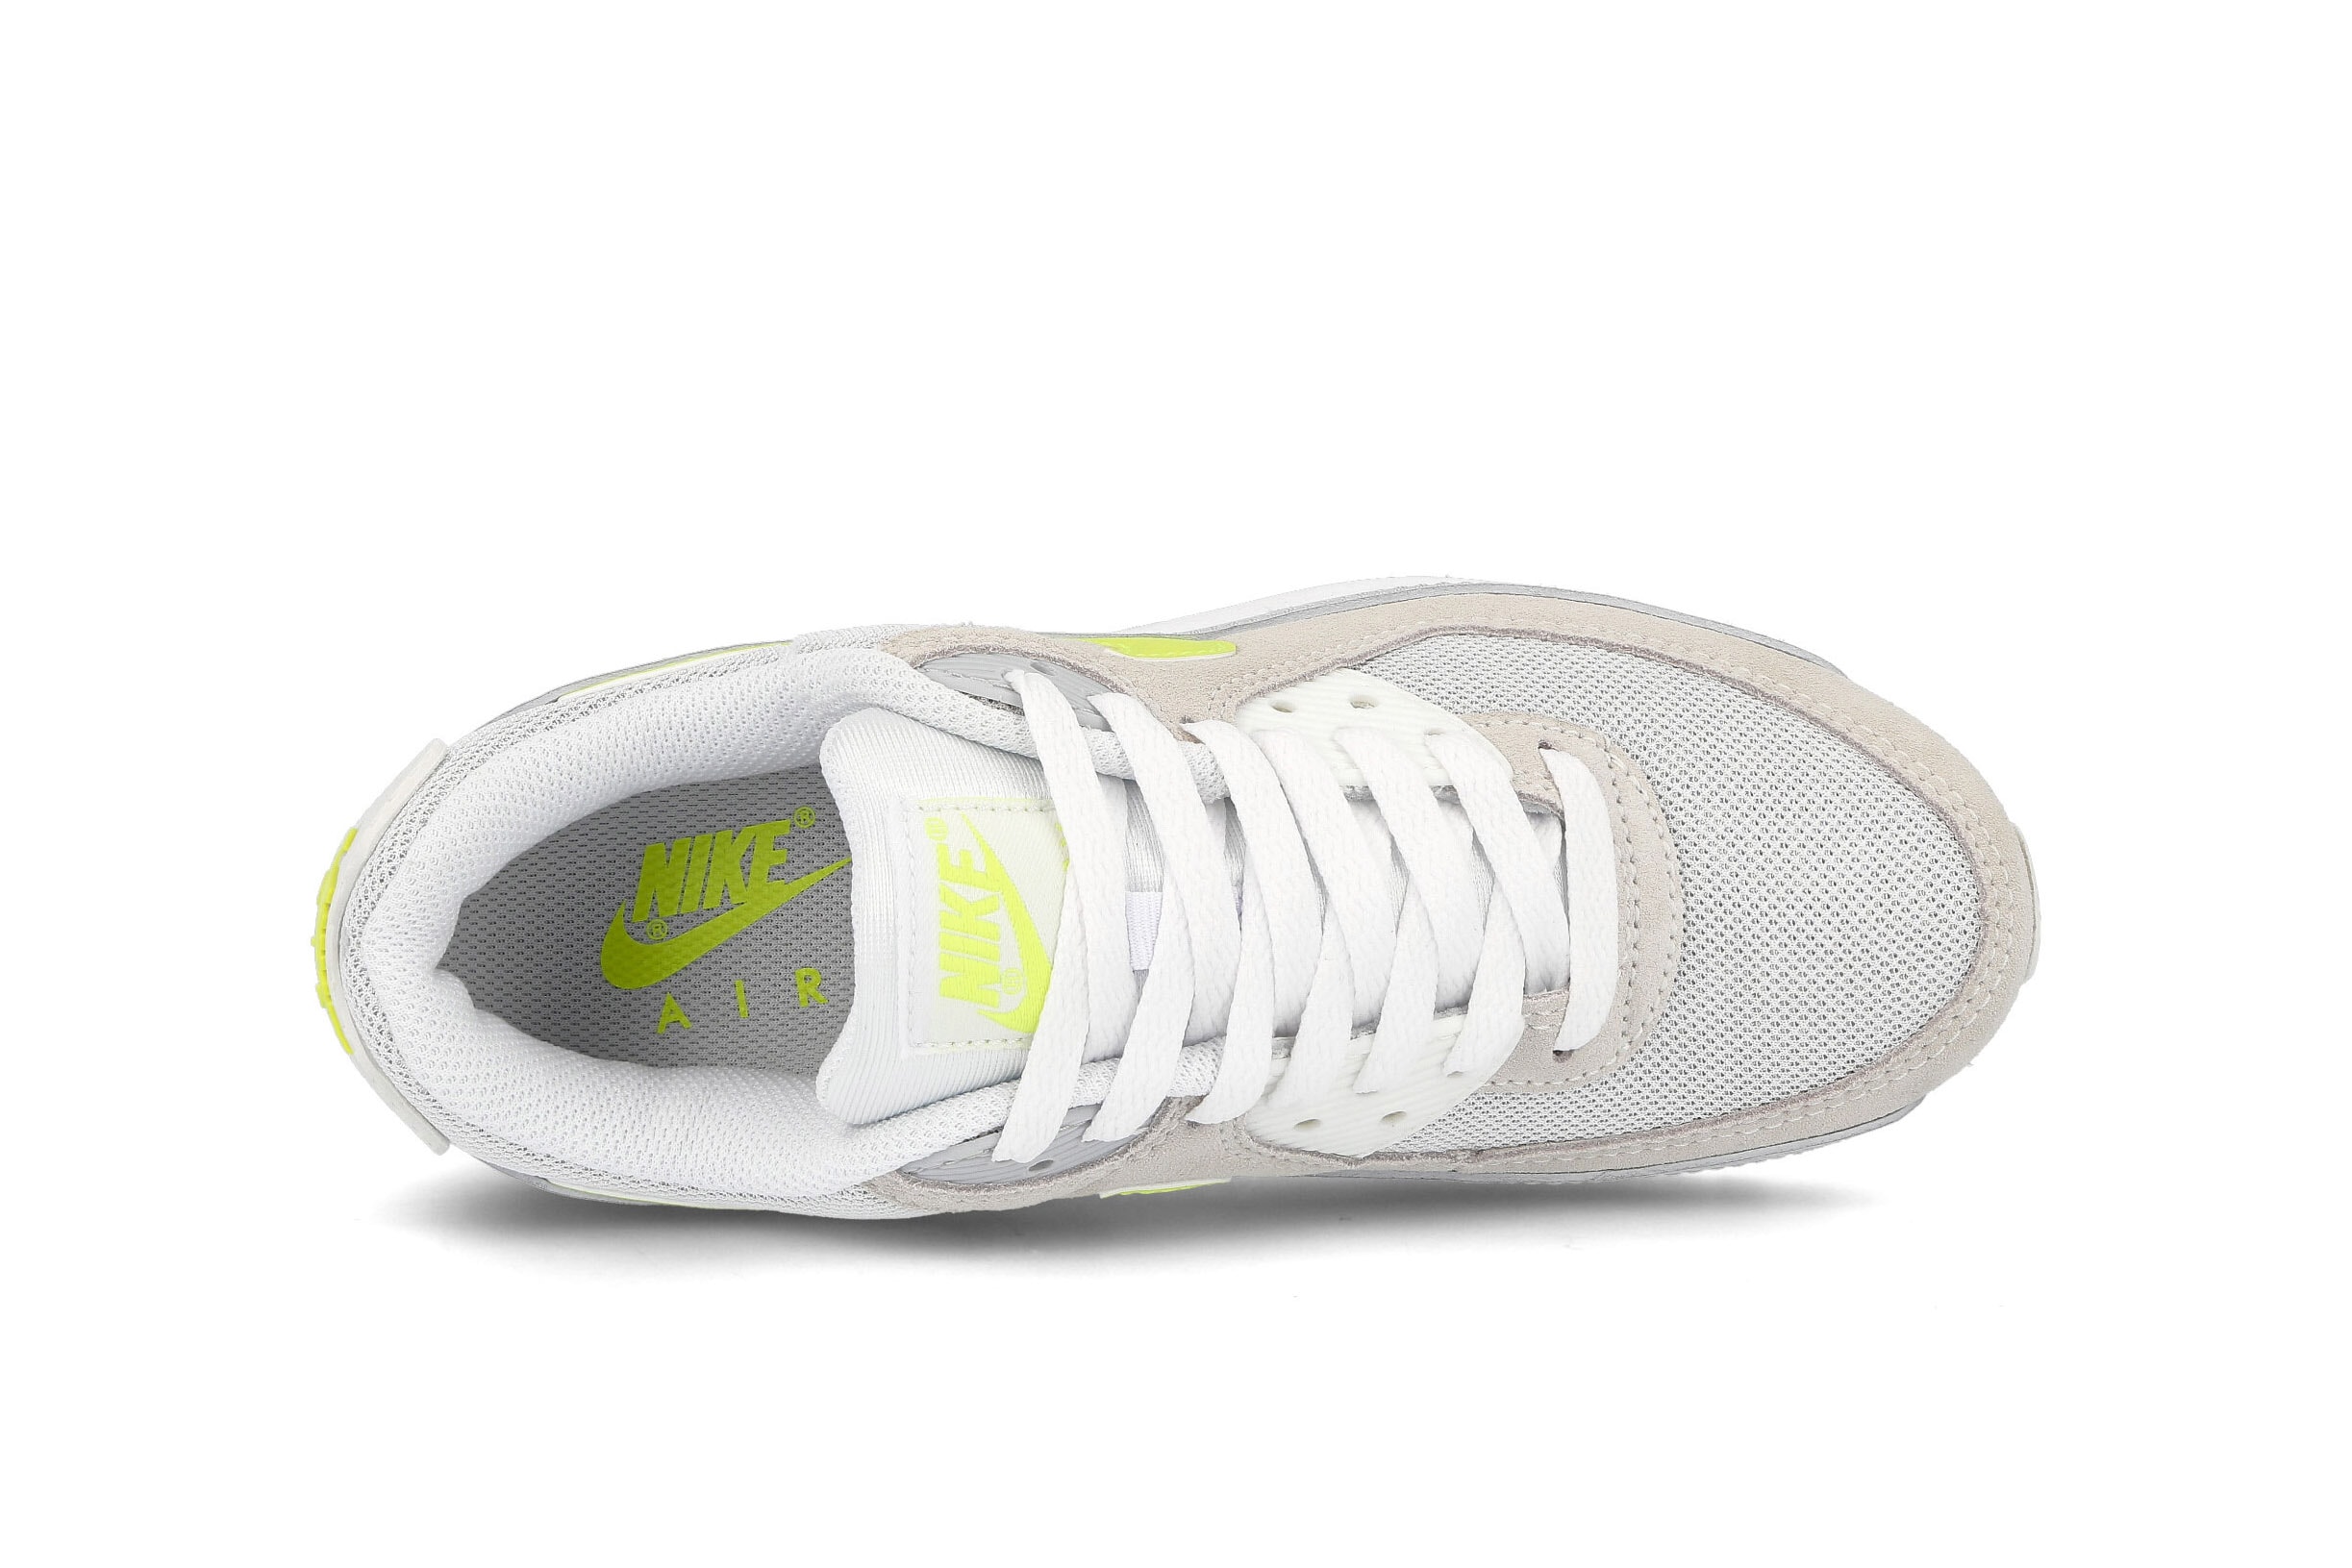 Nike Air Max 90 Pastel Yellow/Grey Sneaker Drop Air May Day 2020 Release